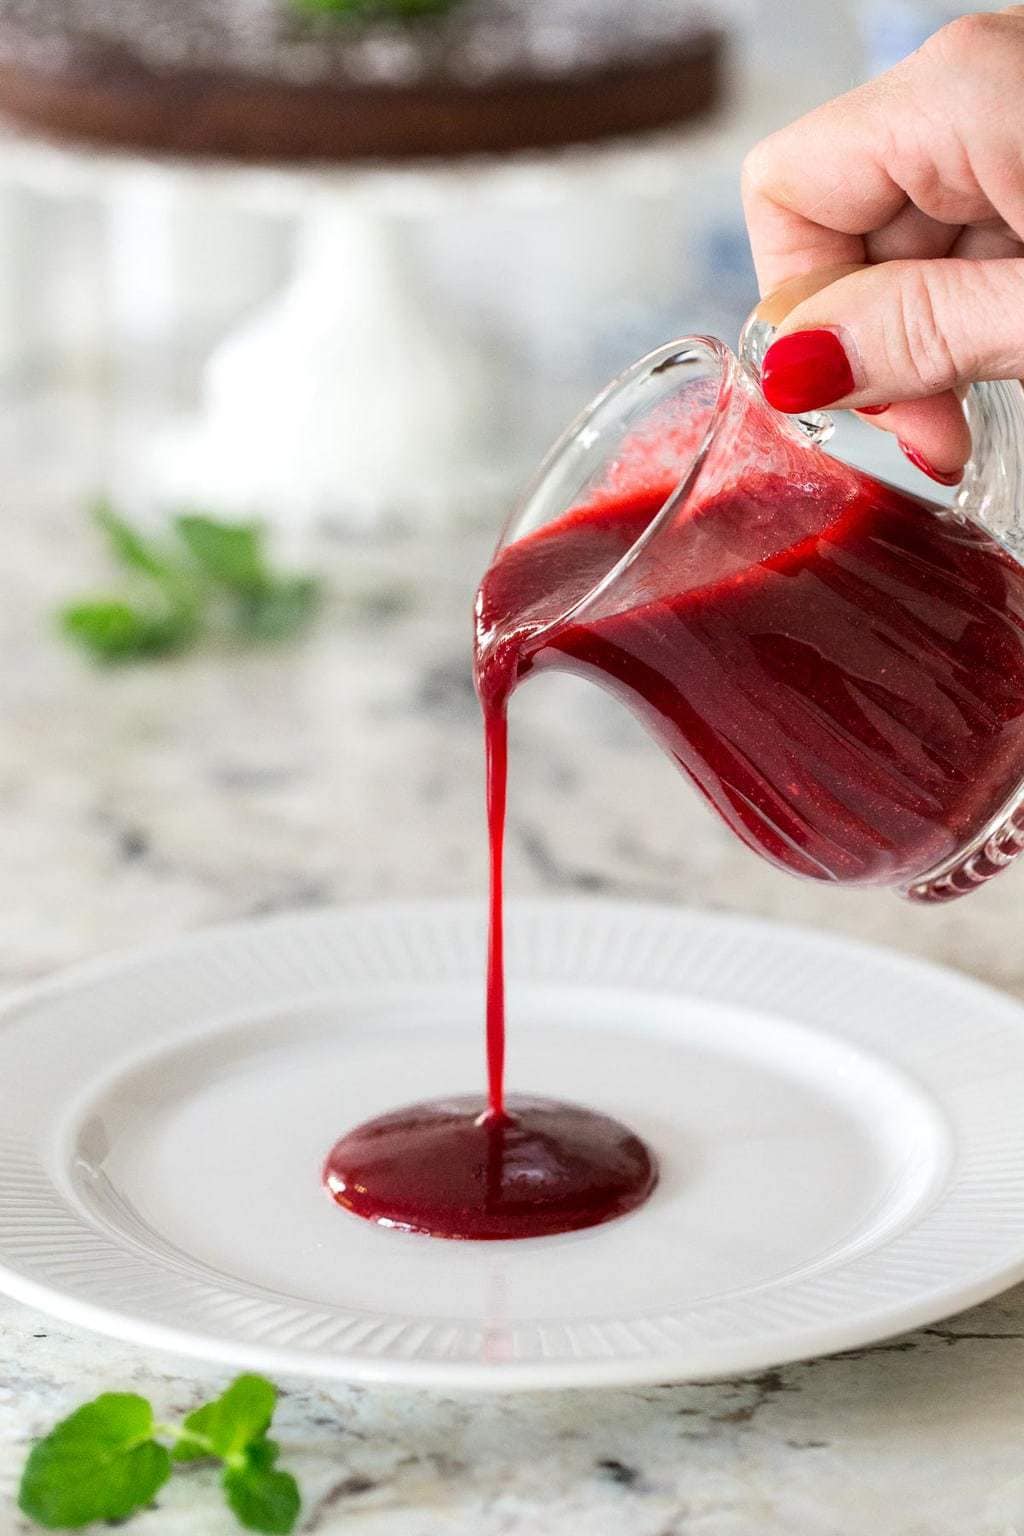 Raspberry sauce uses